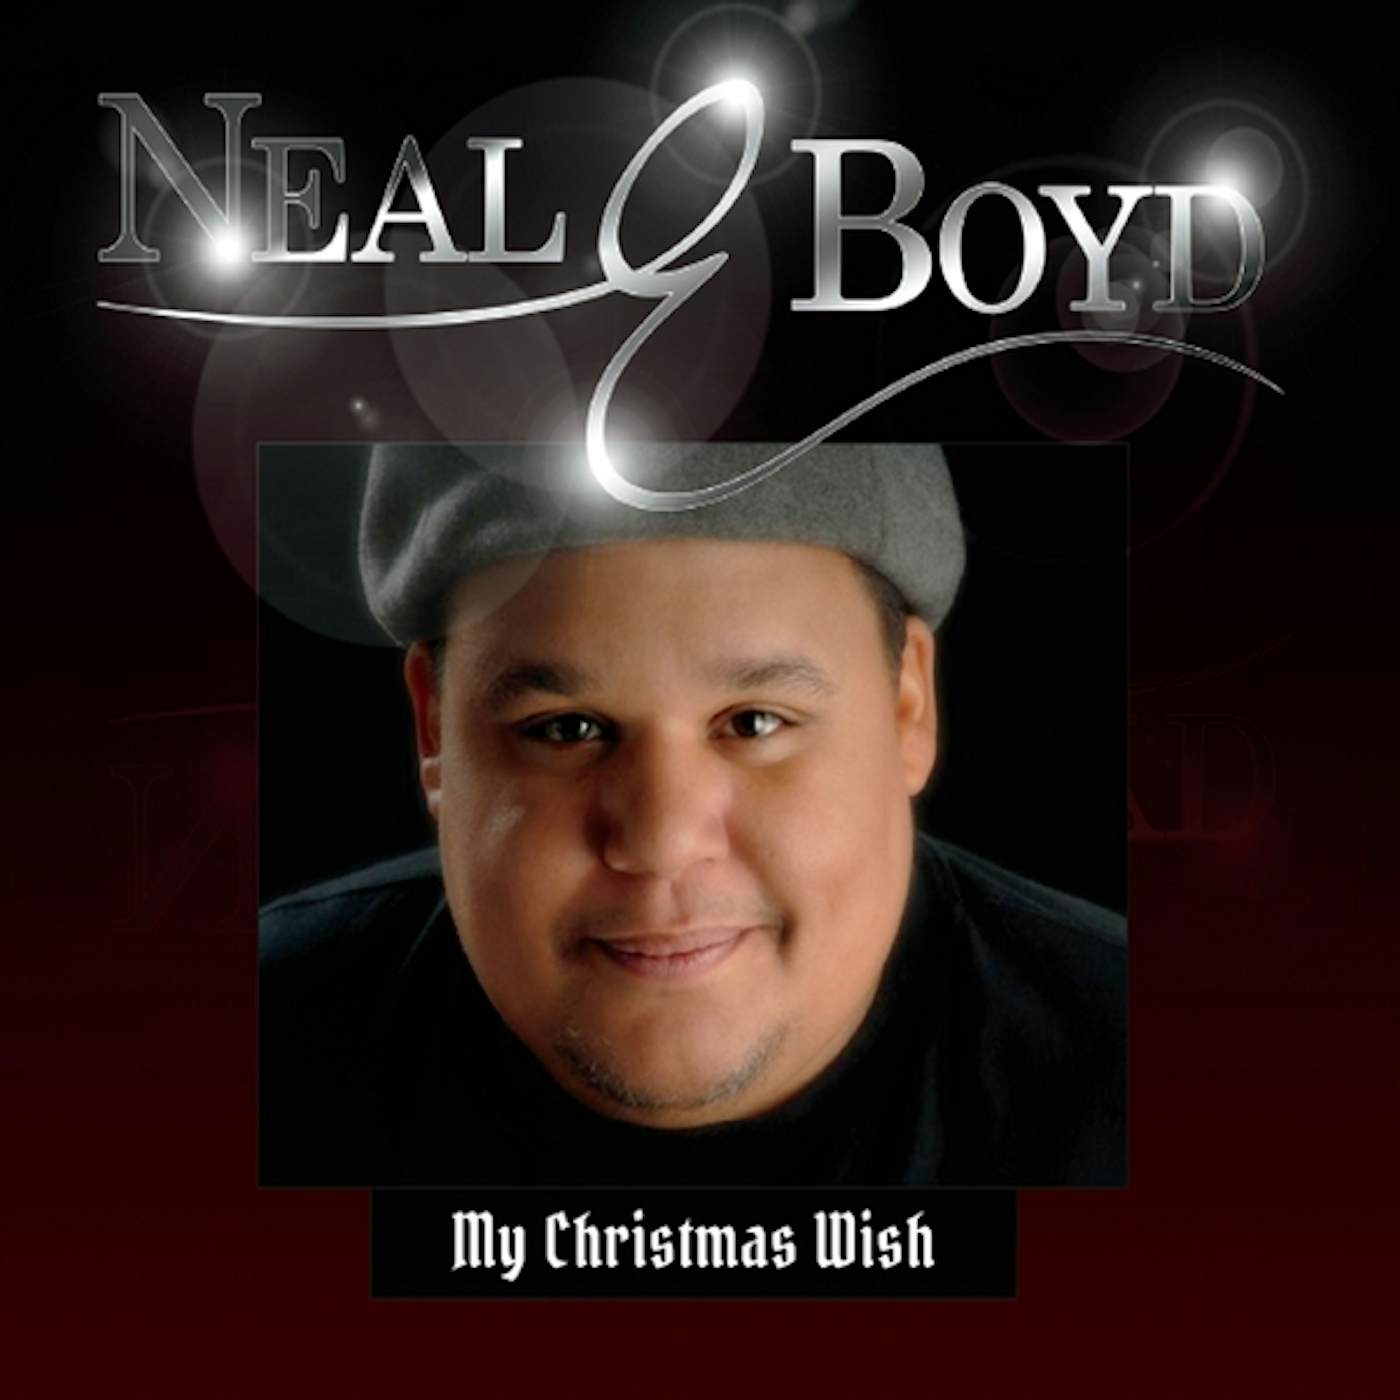 Neal E. Boyd MY CHRISTMAS WISH CD